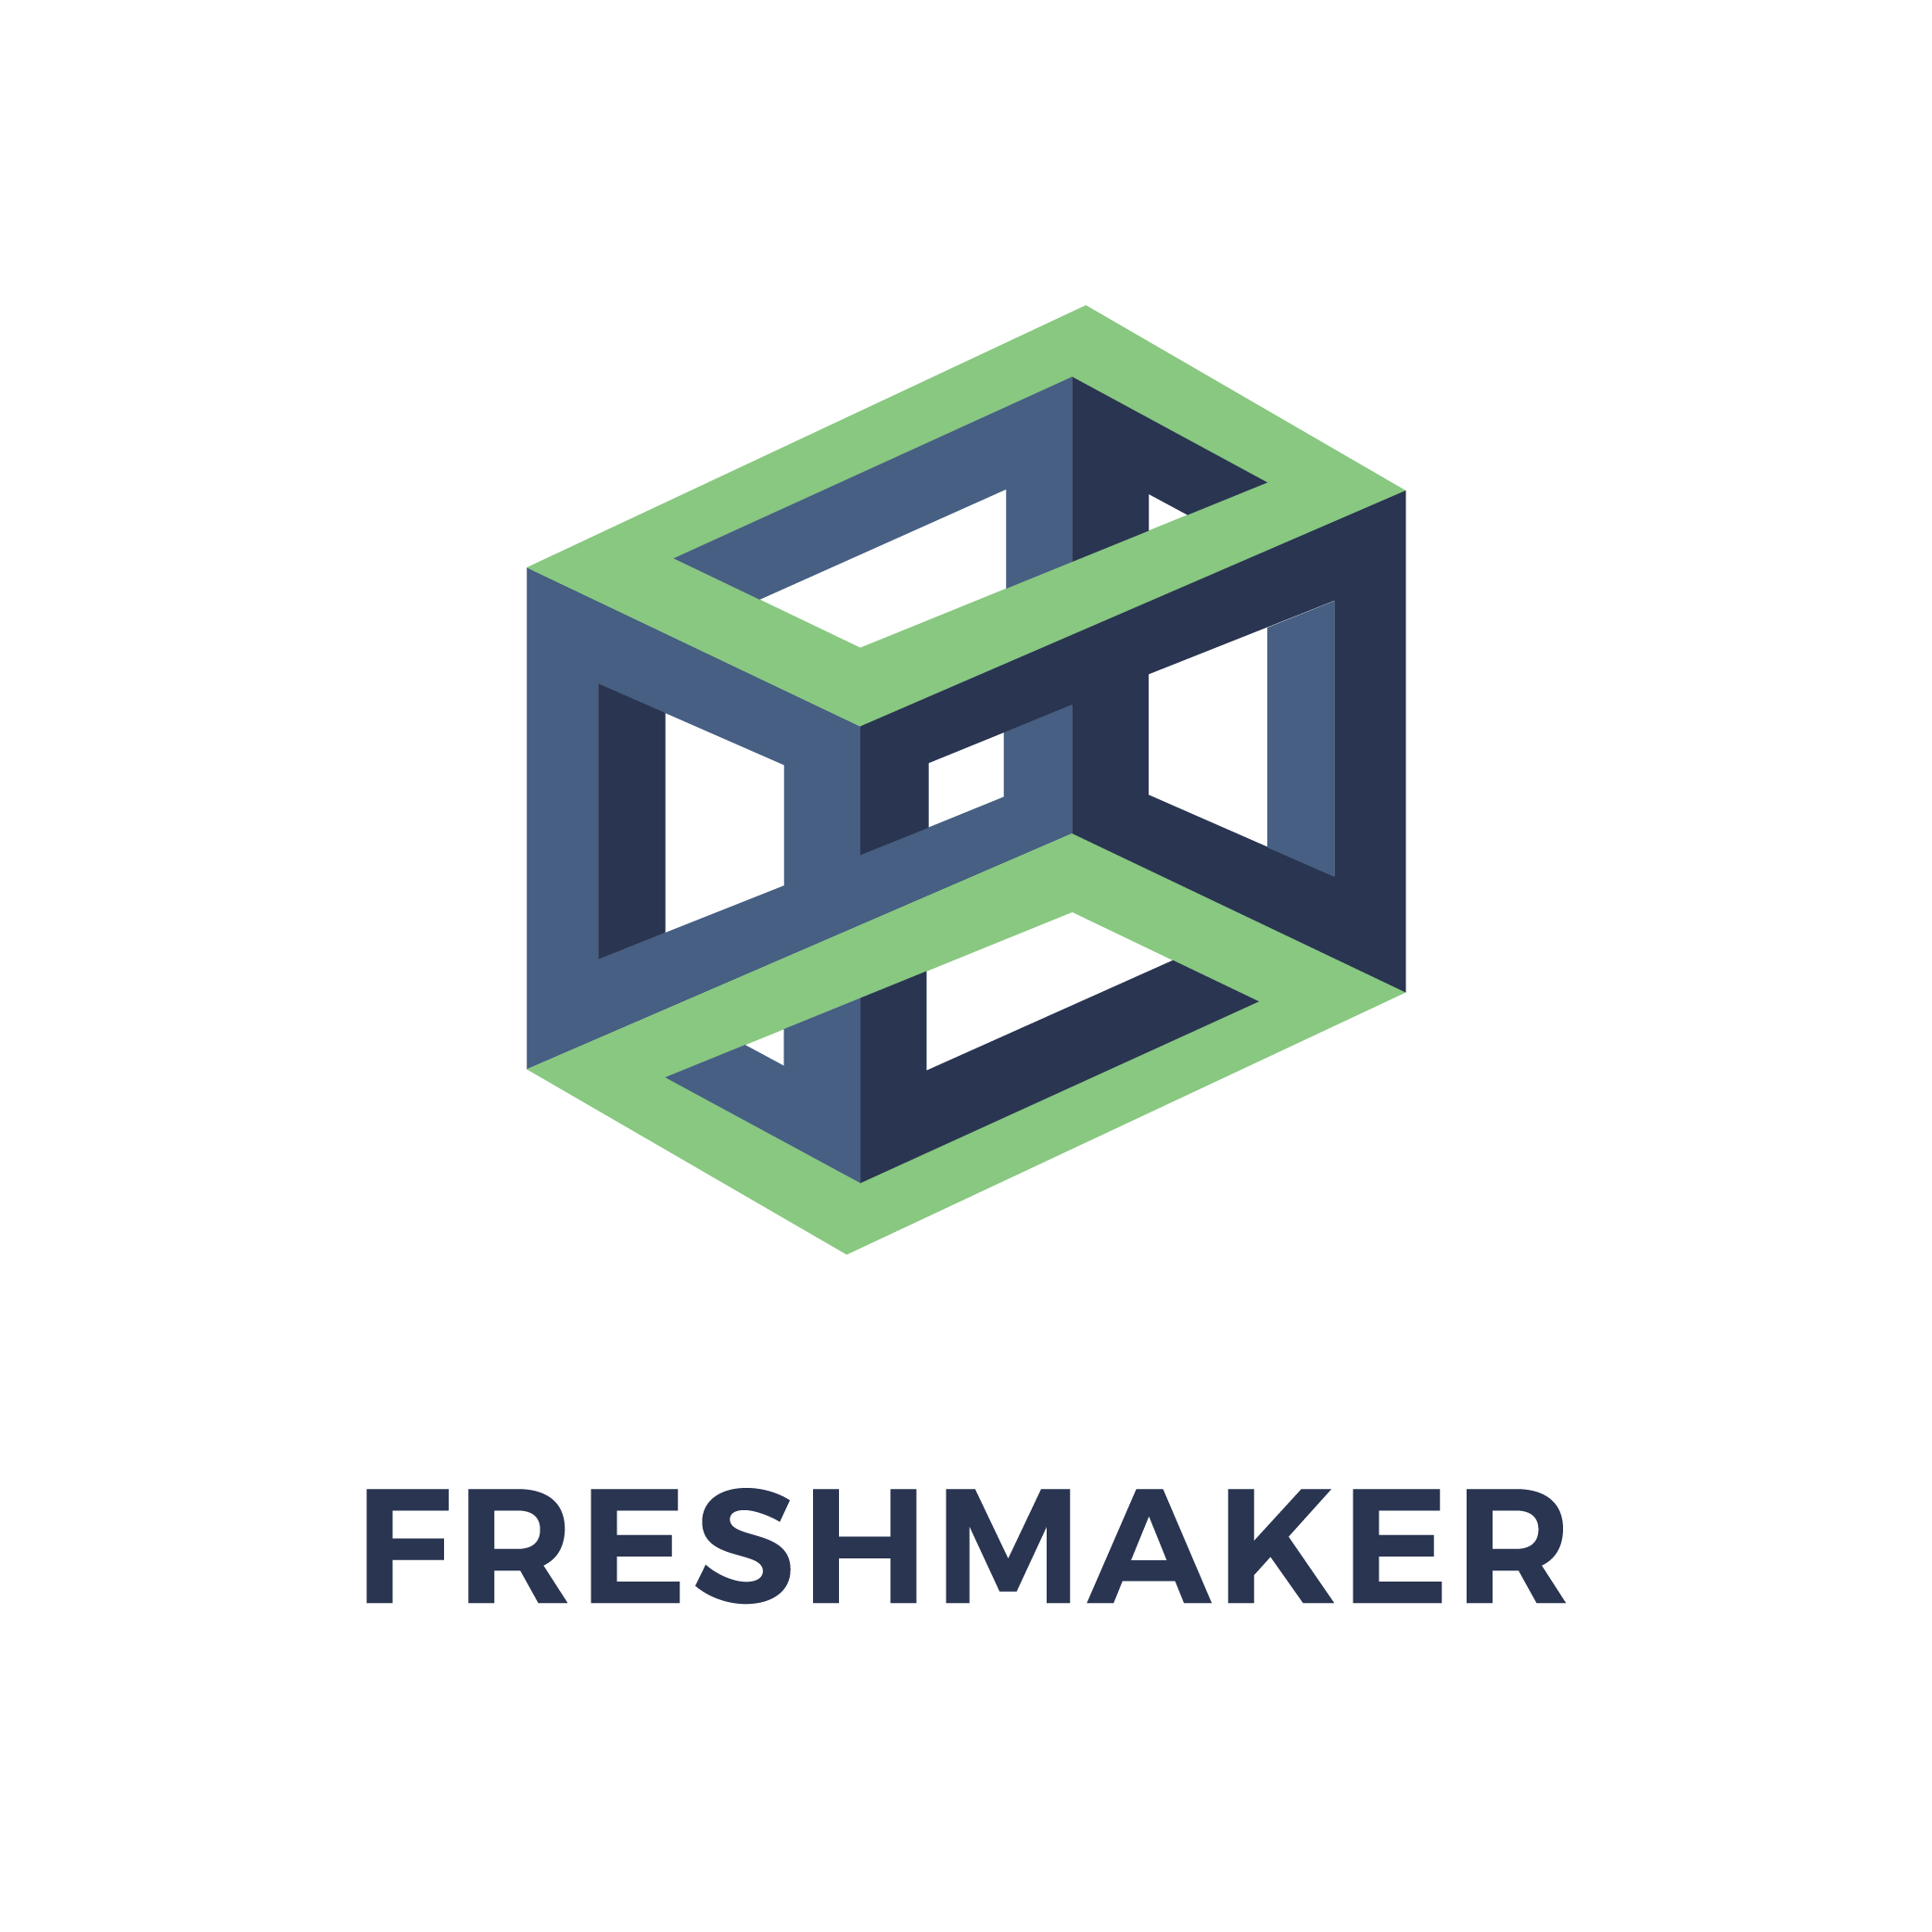 Freshmaker logo - color